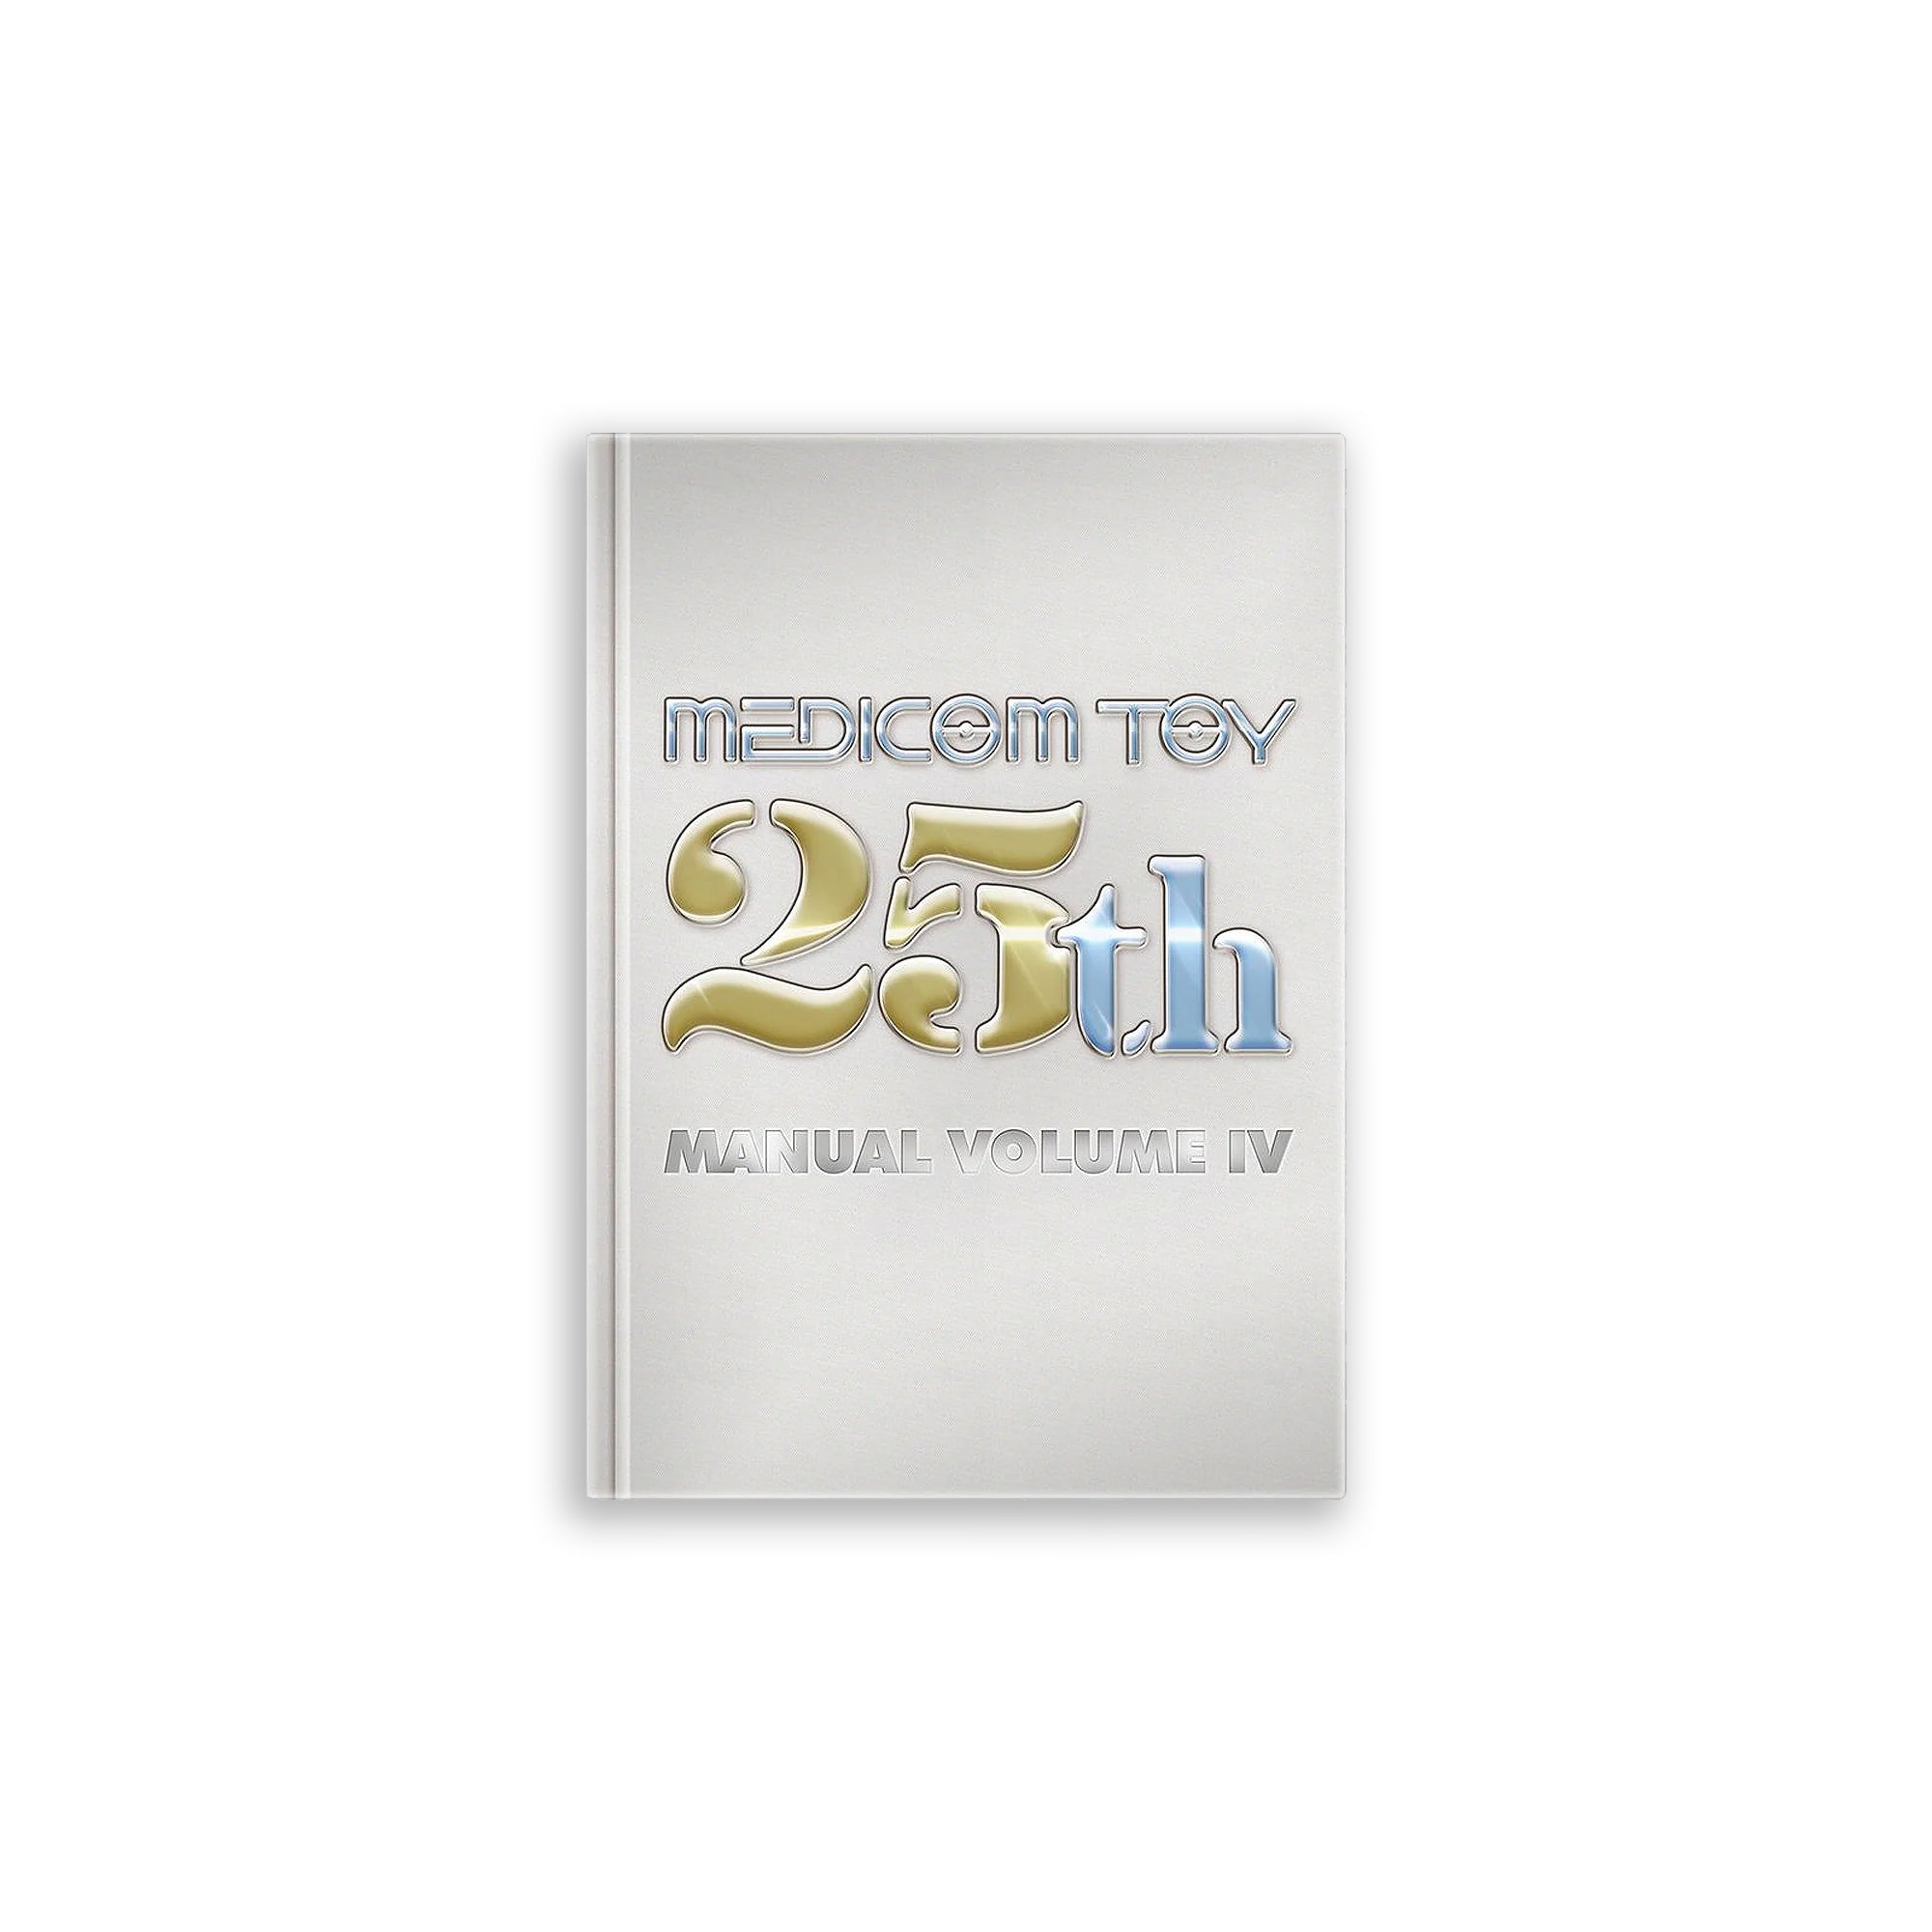 MEDICOMTOY 25thANNIVERSARY MANUAL Vol.IV - アート/エンタメ